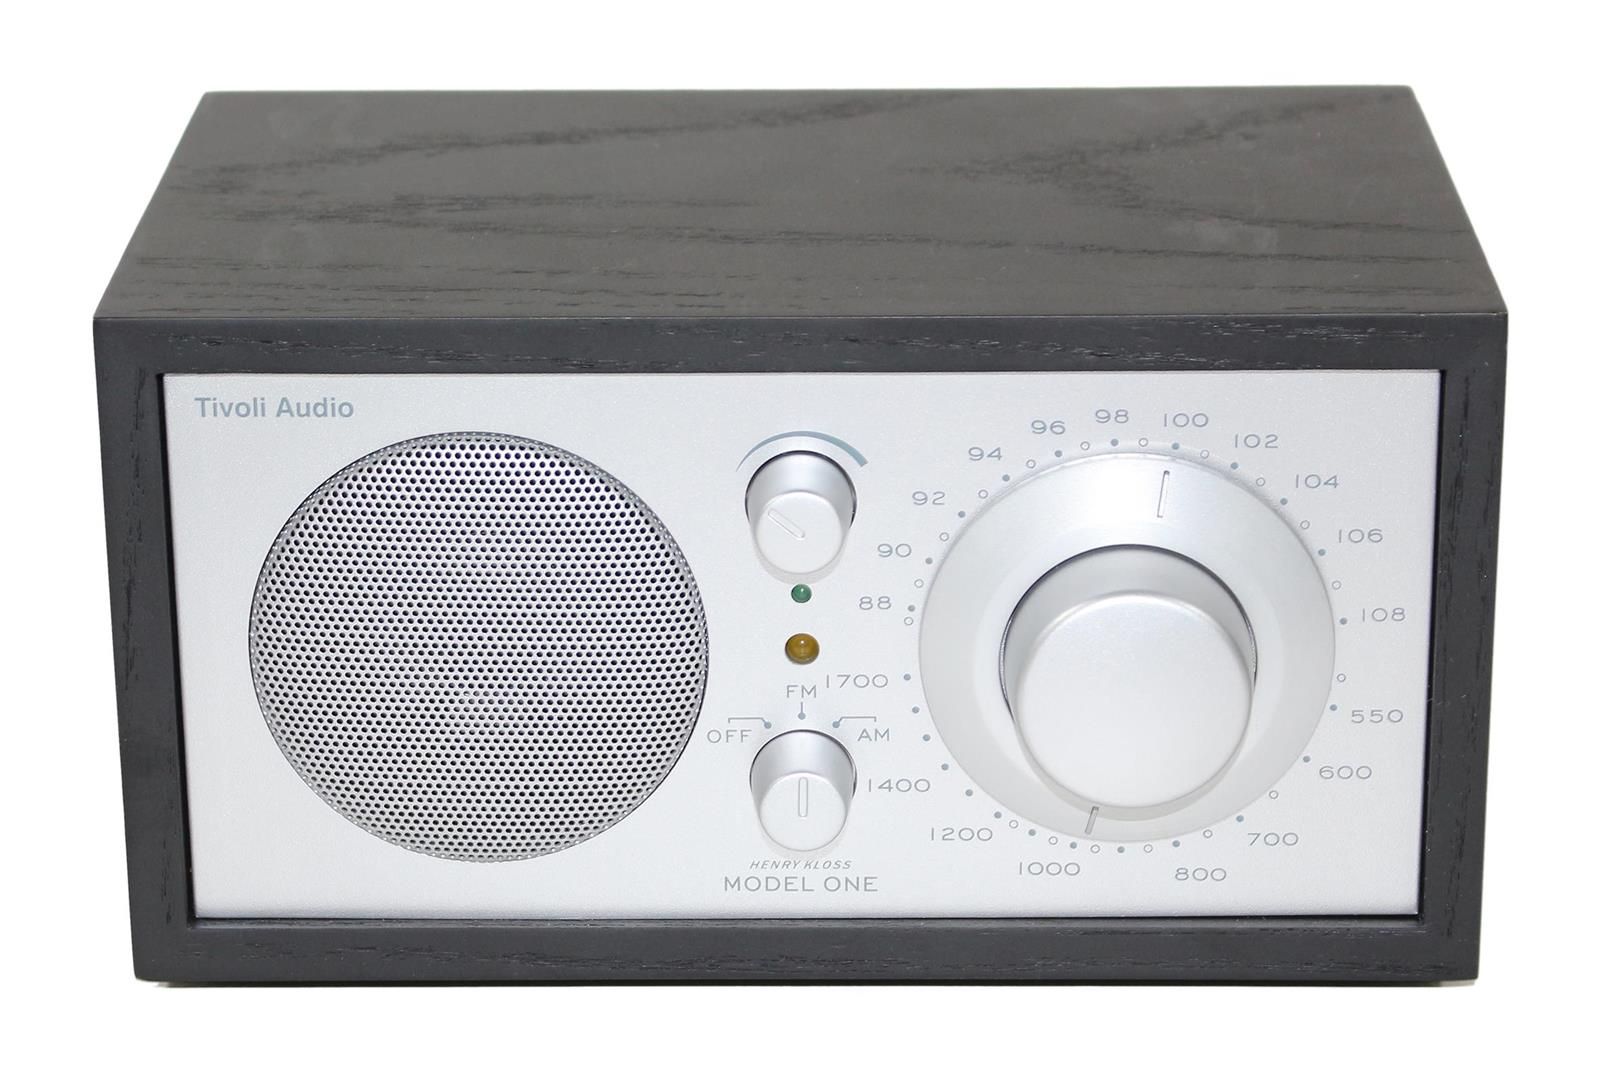 Tivoli Audio Modell one. 4 Radios in 3 Varianten. Entwurf Henry Kloss. Optisch g&hellip;